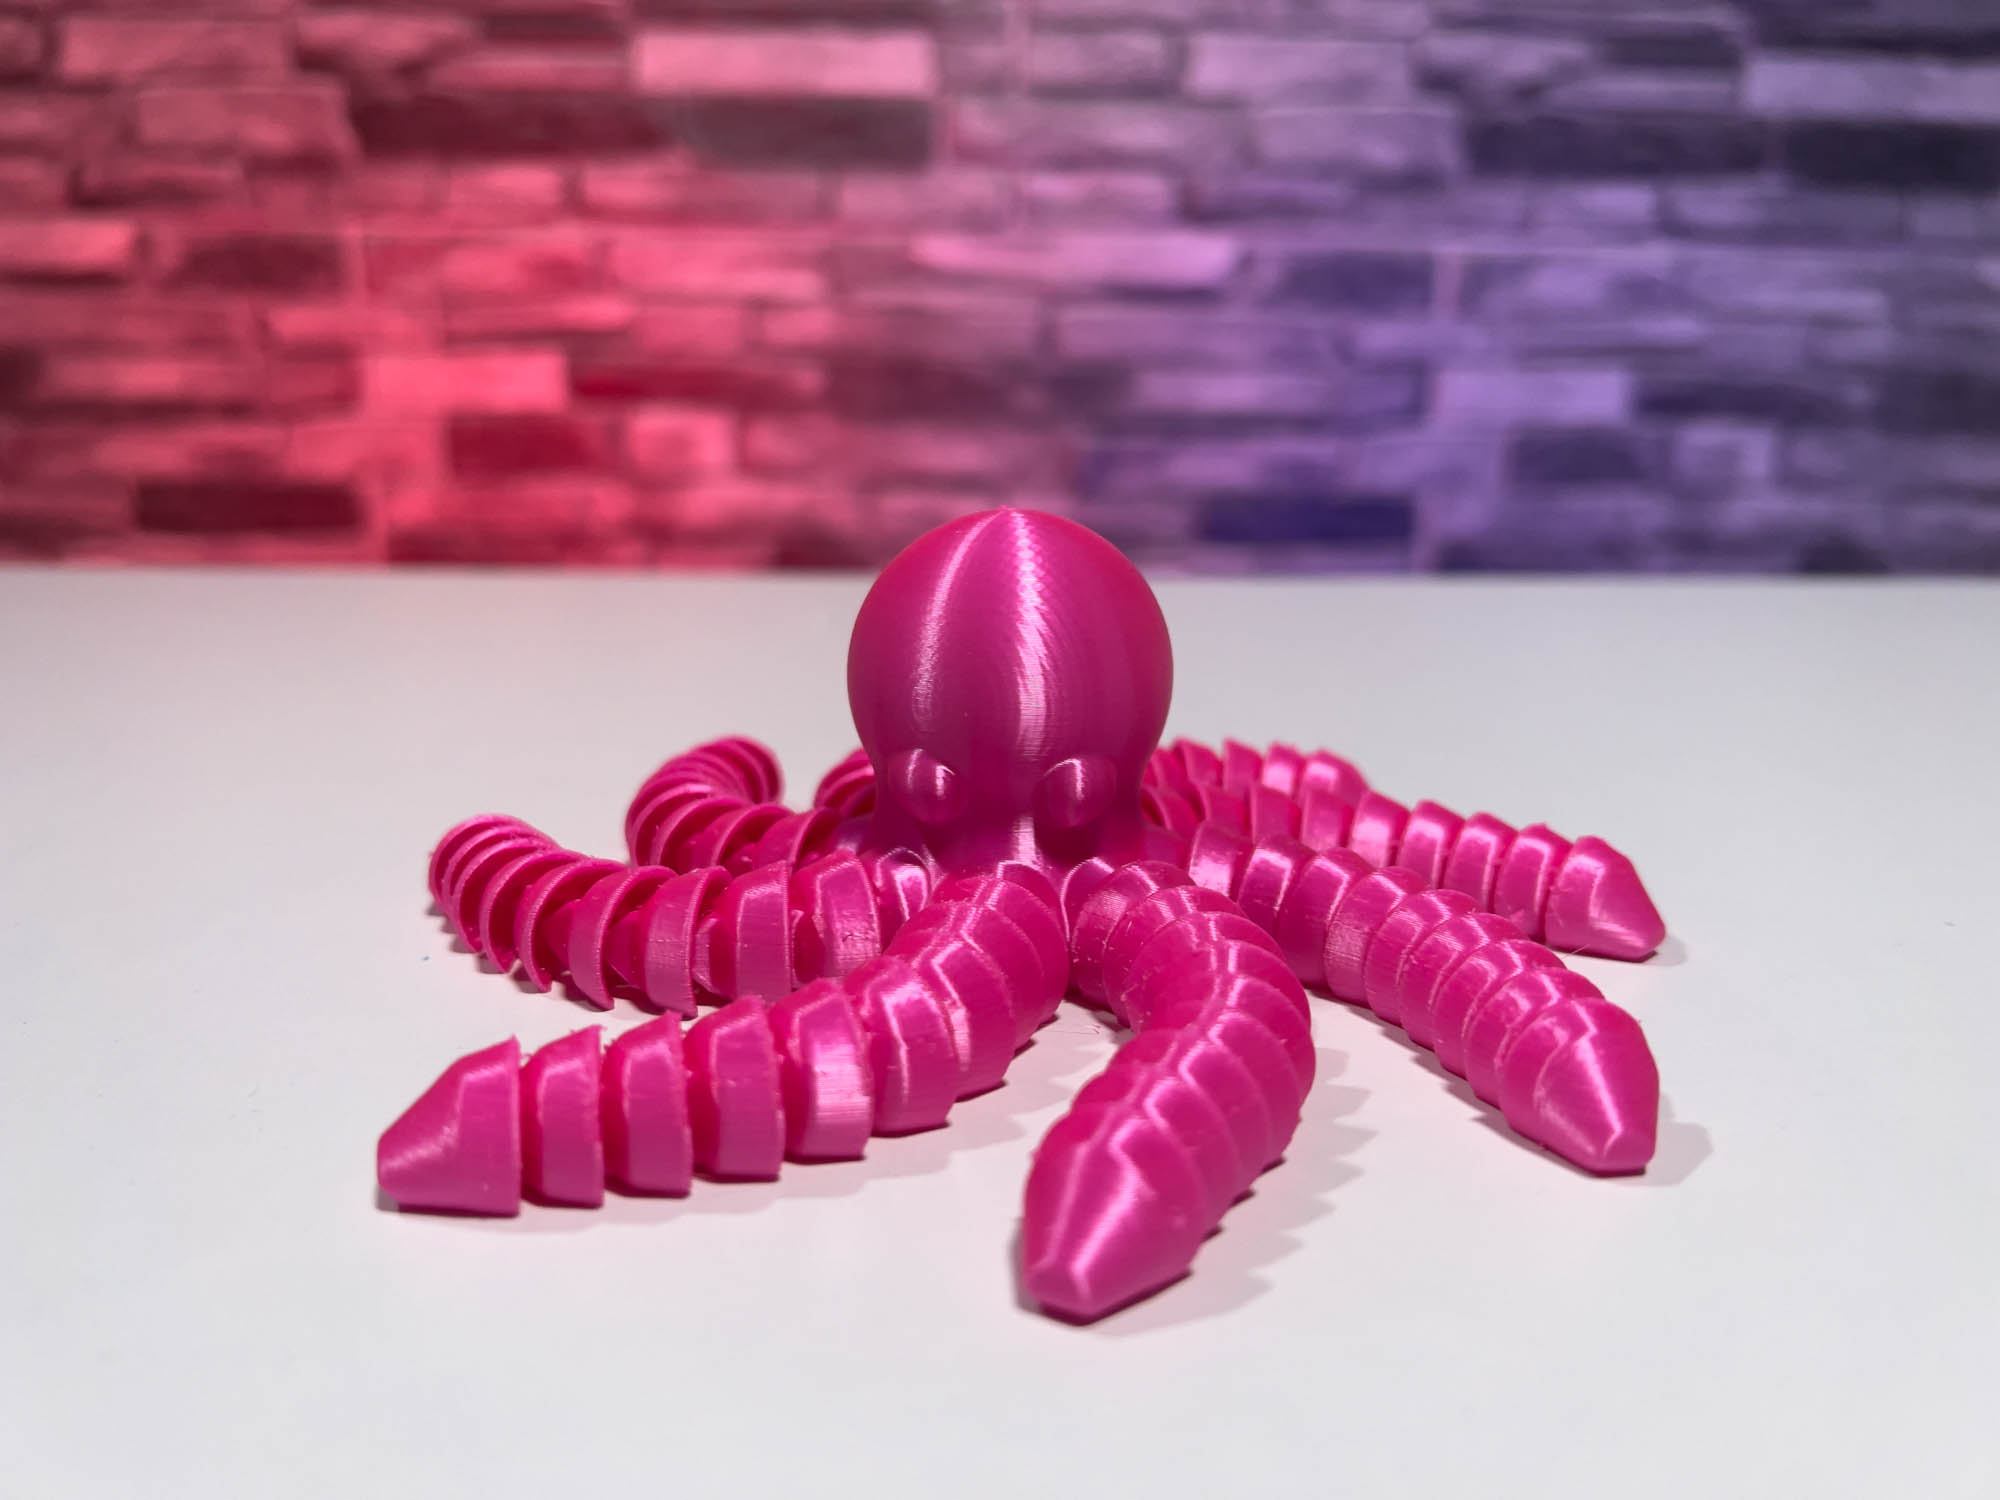 3D Printed Fun Articulated Octopus